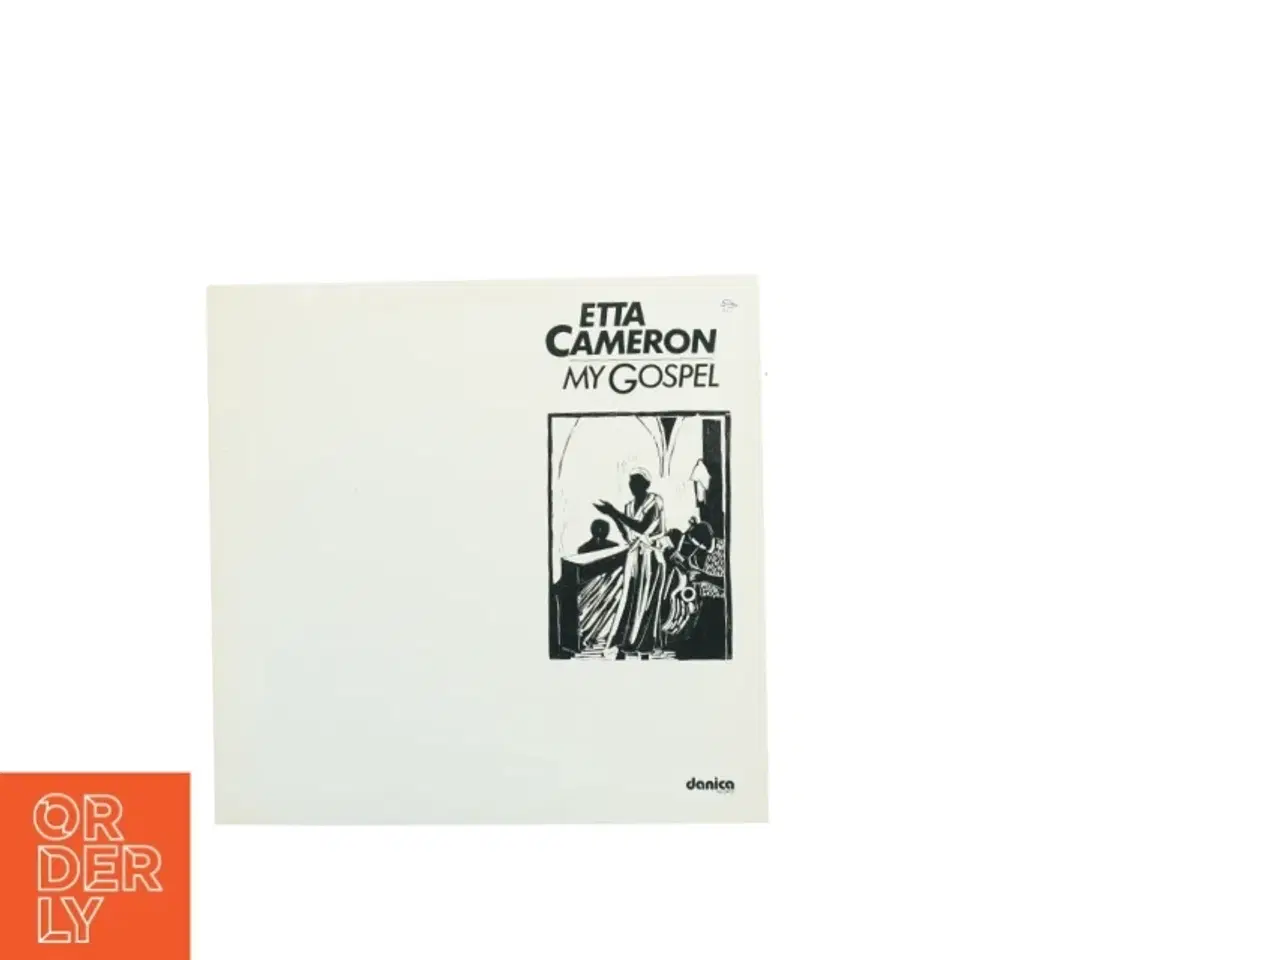 Billede 1 - Etta Cameron - My Gospel LP fra Janica (str. 31 x 31 cm)